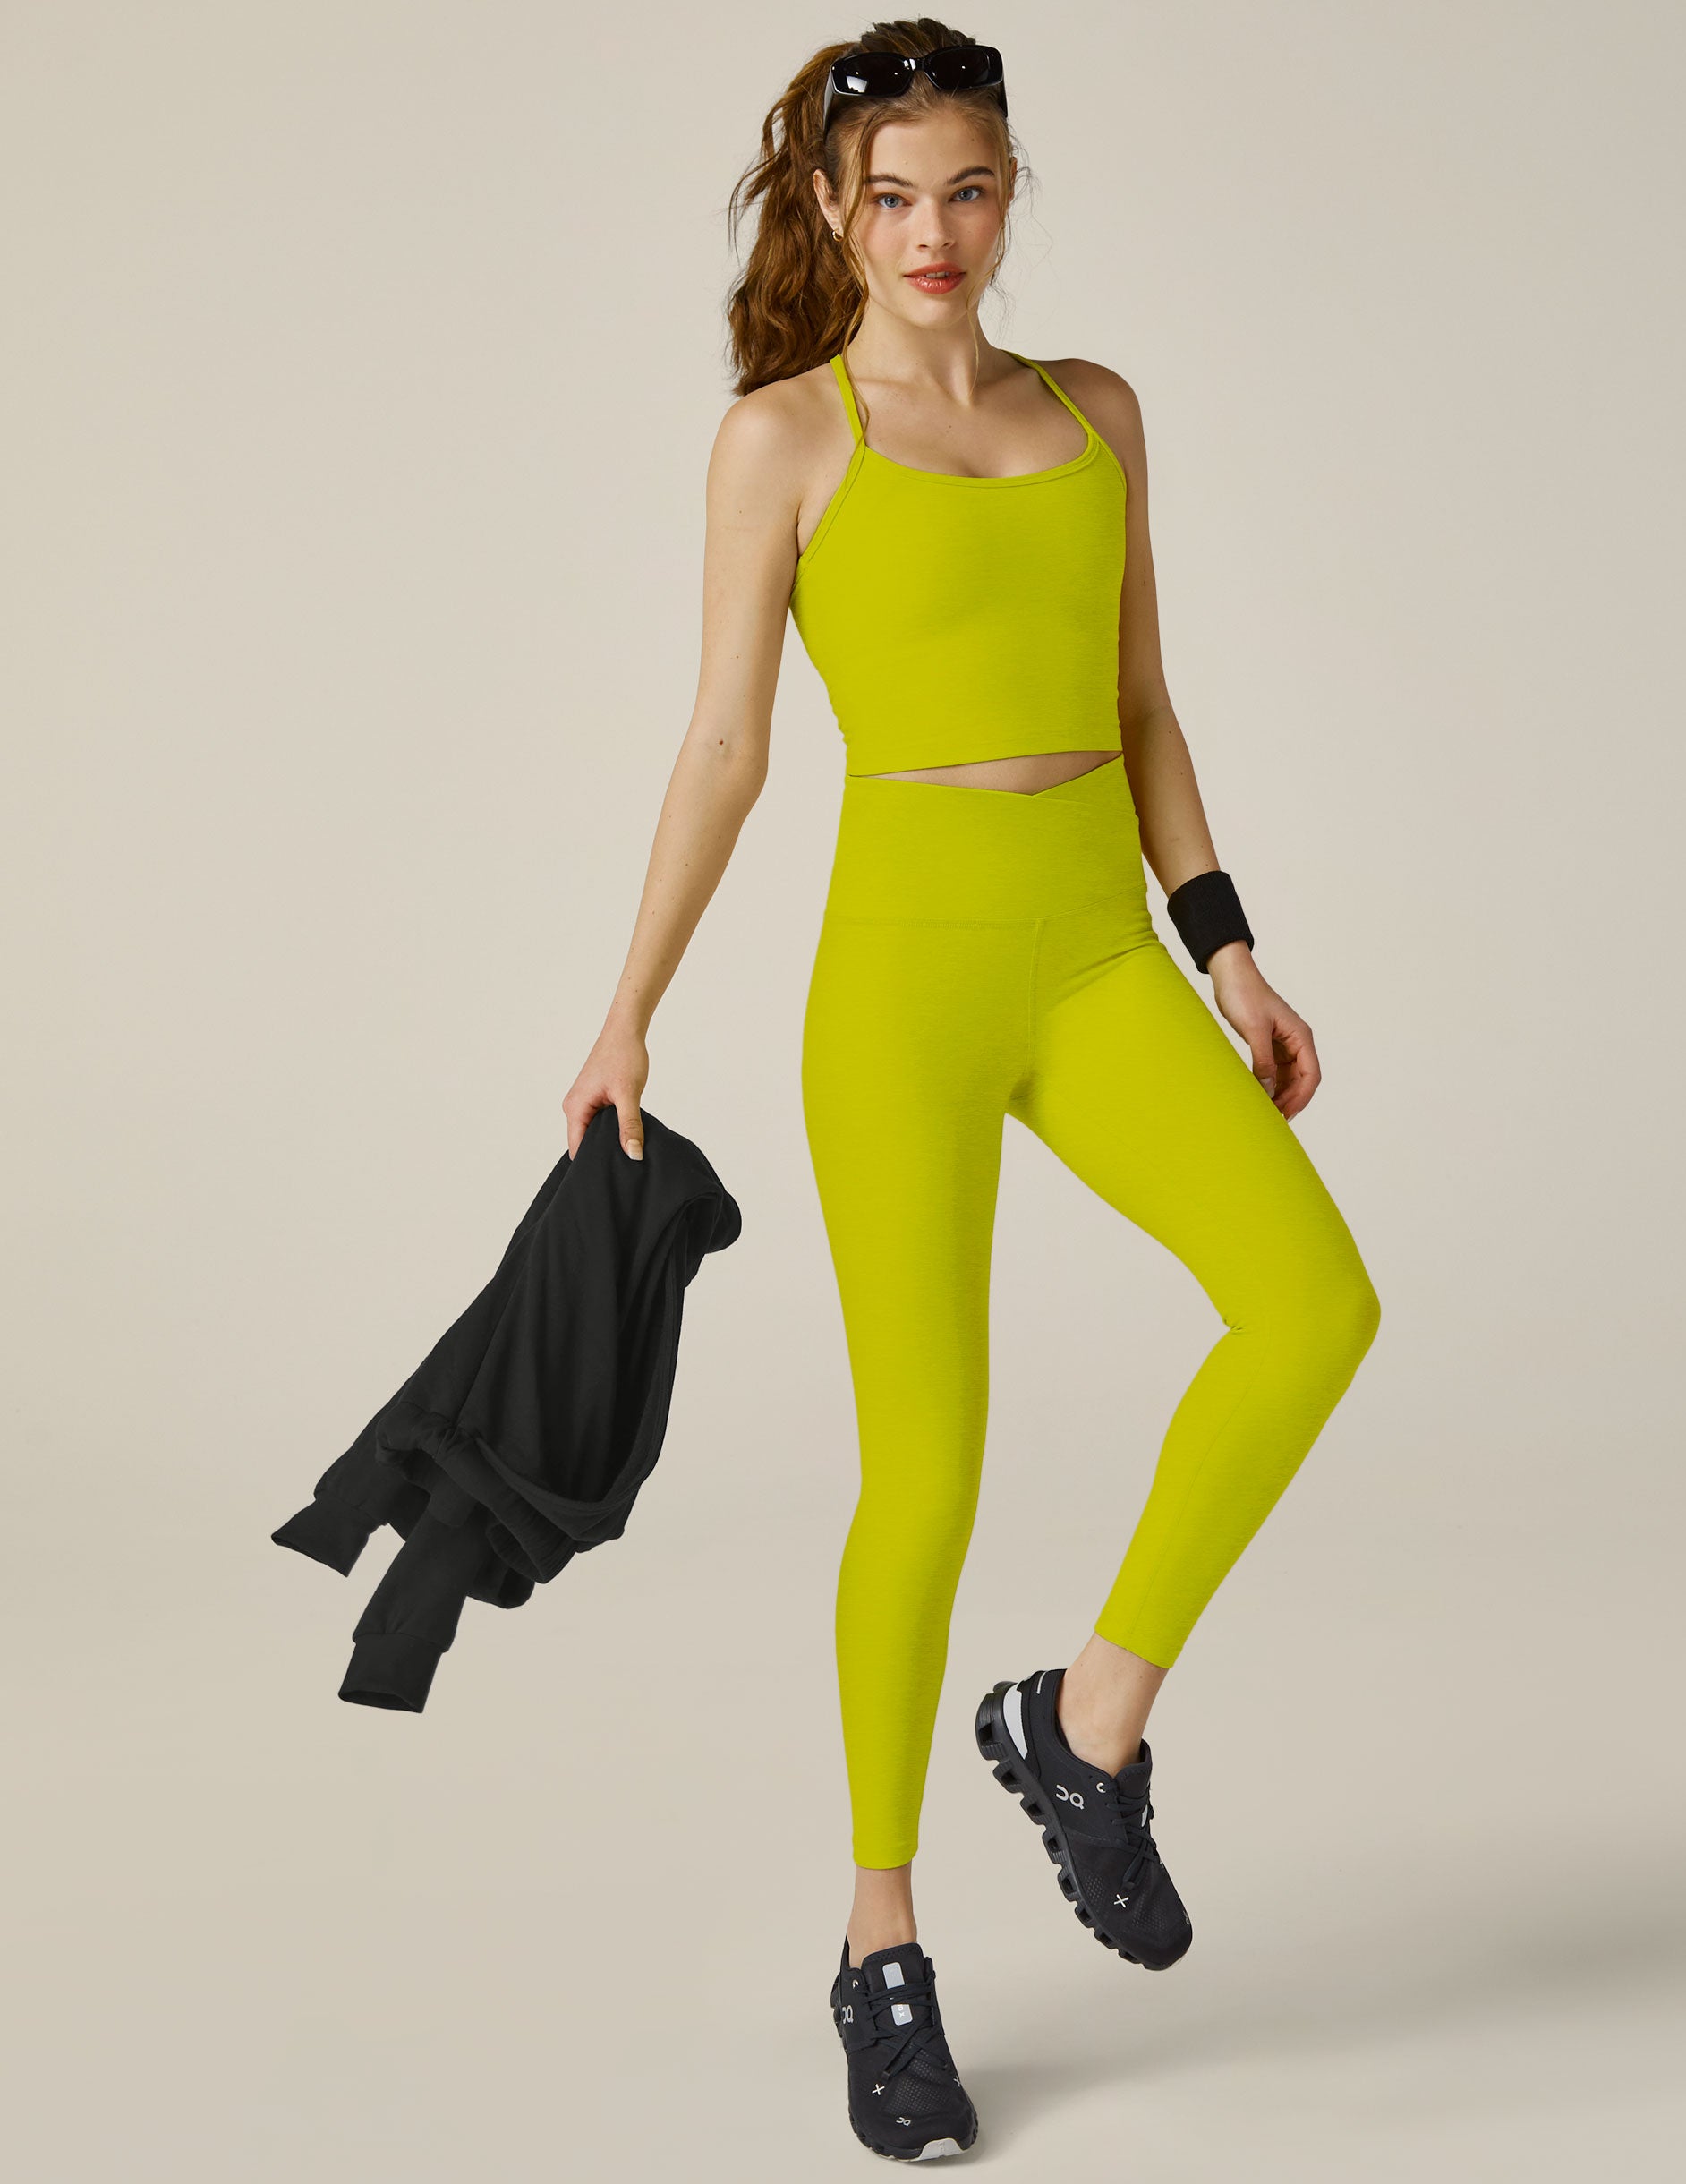 SET ACTIVE neon yellow high rise leggings size M Medium Womens athletic